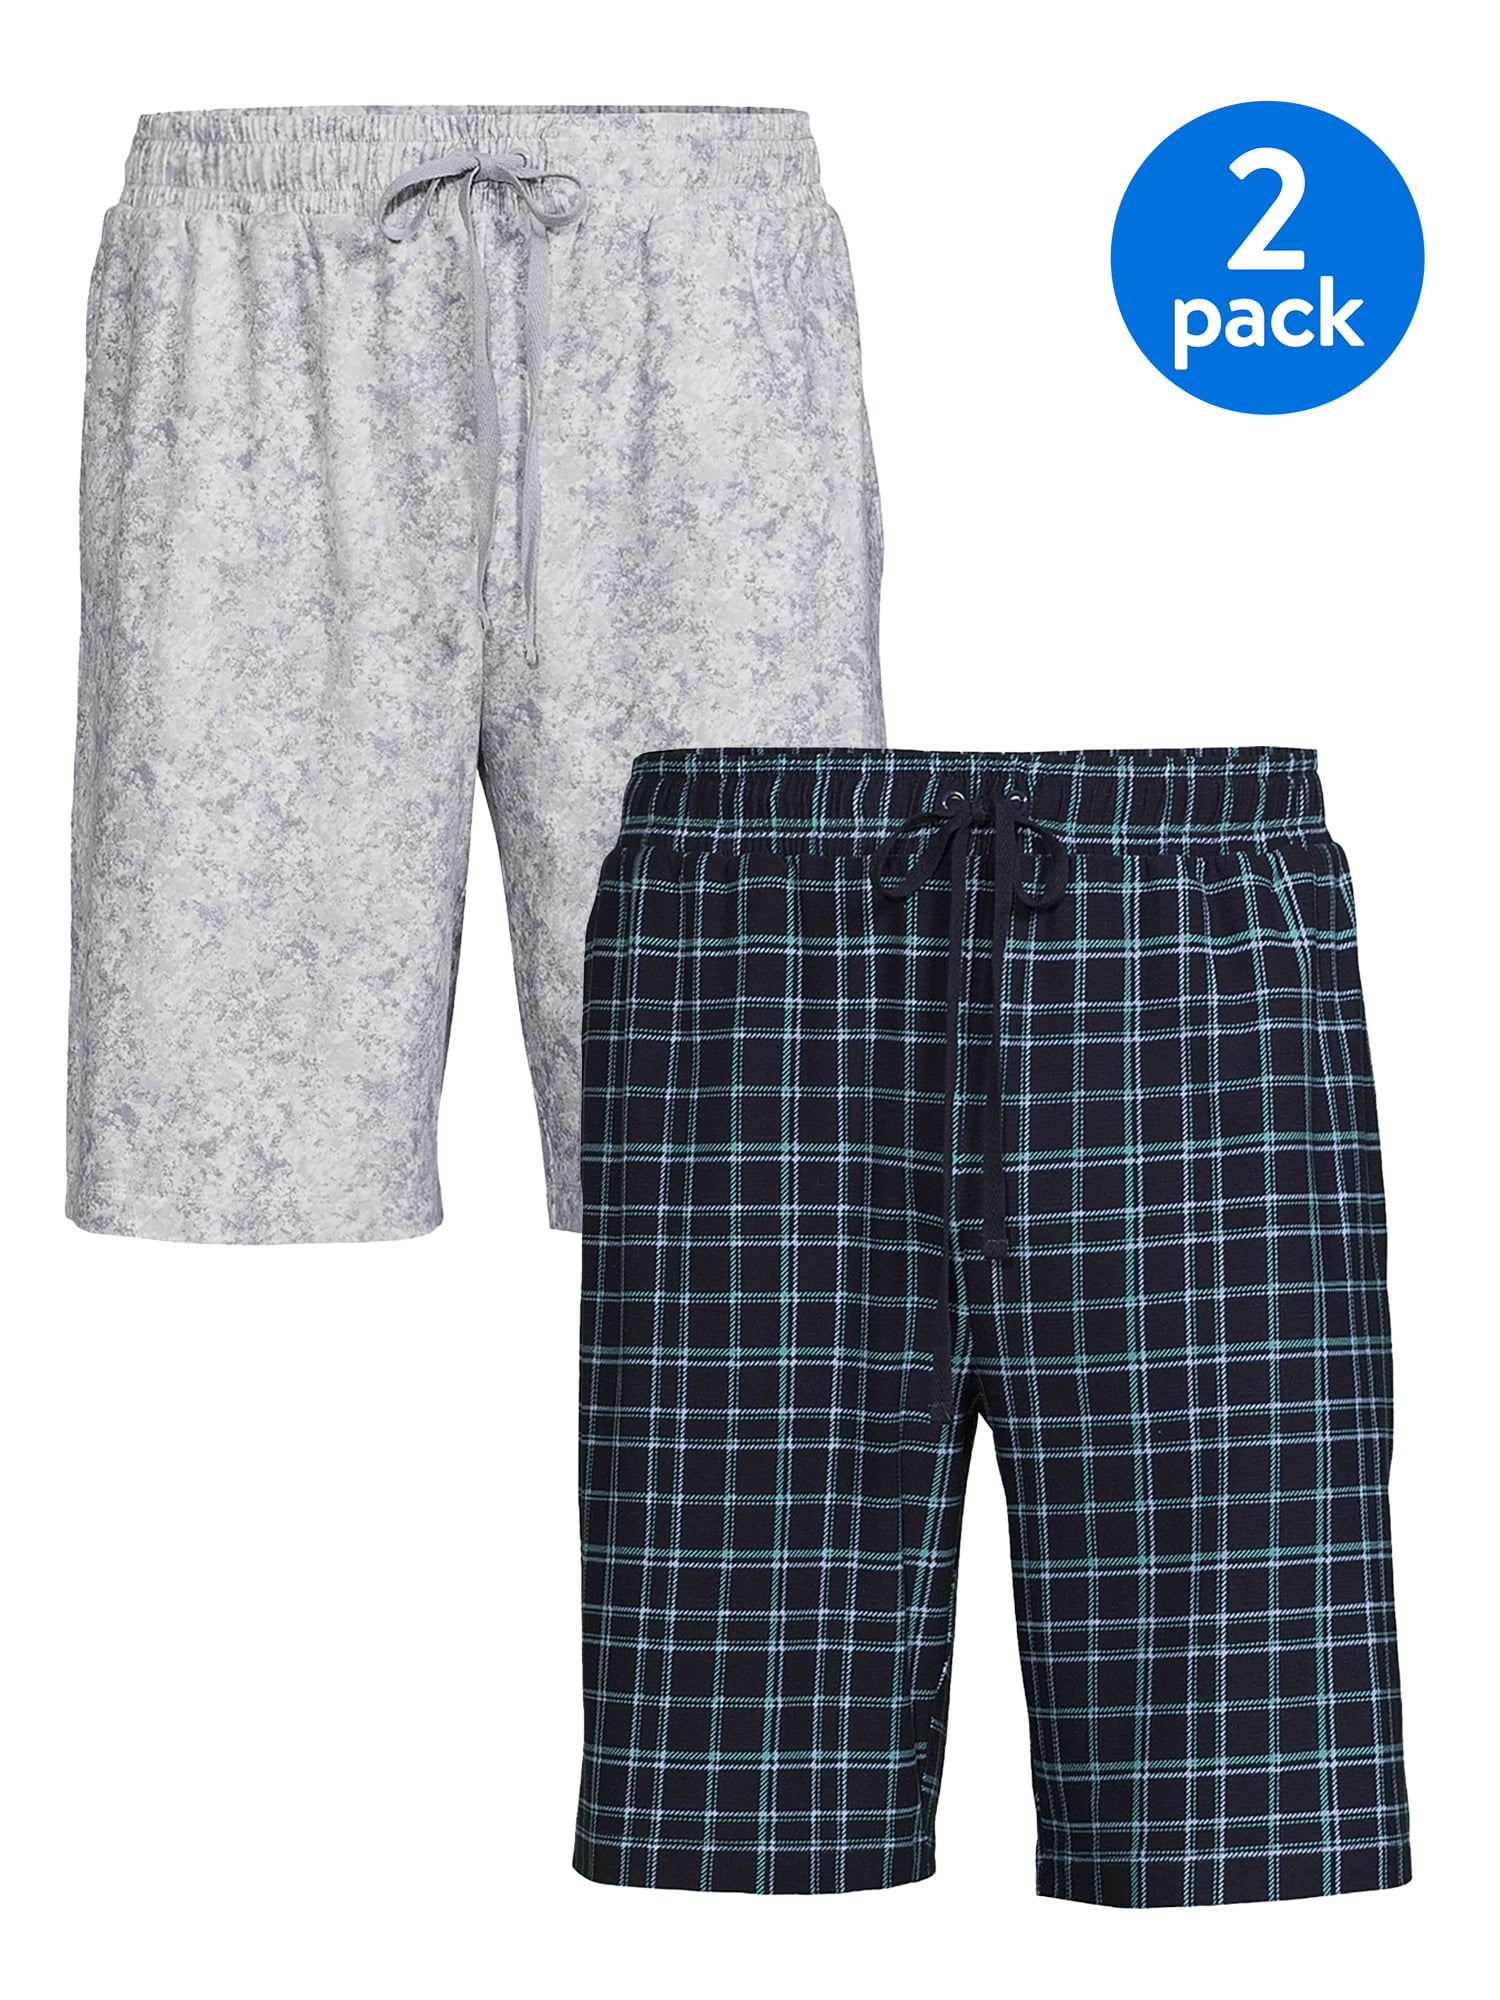 Mens 2 Pack Lounge Shorts Stretch Jersey Night Wear Pyjamas Summer Sizes M-3XL 